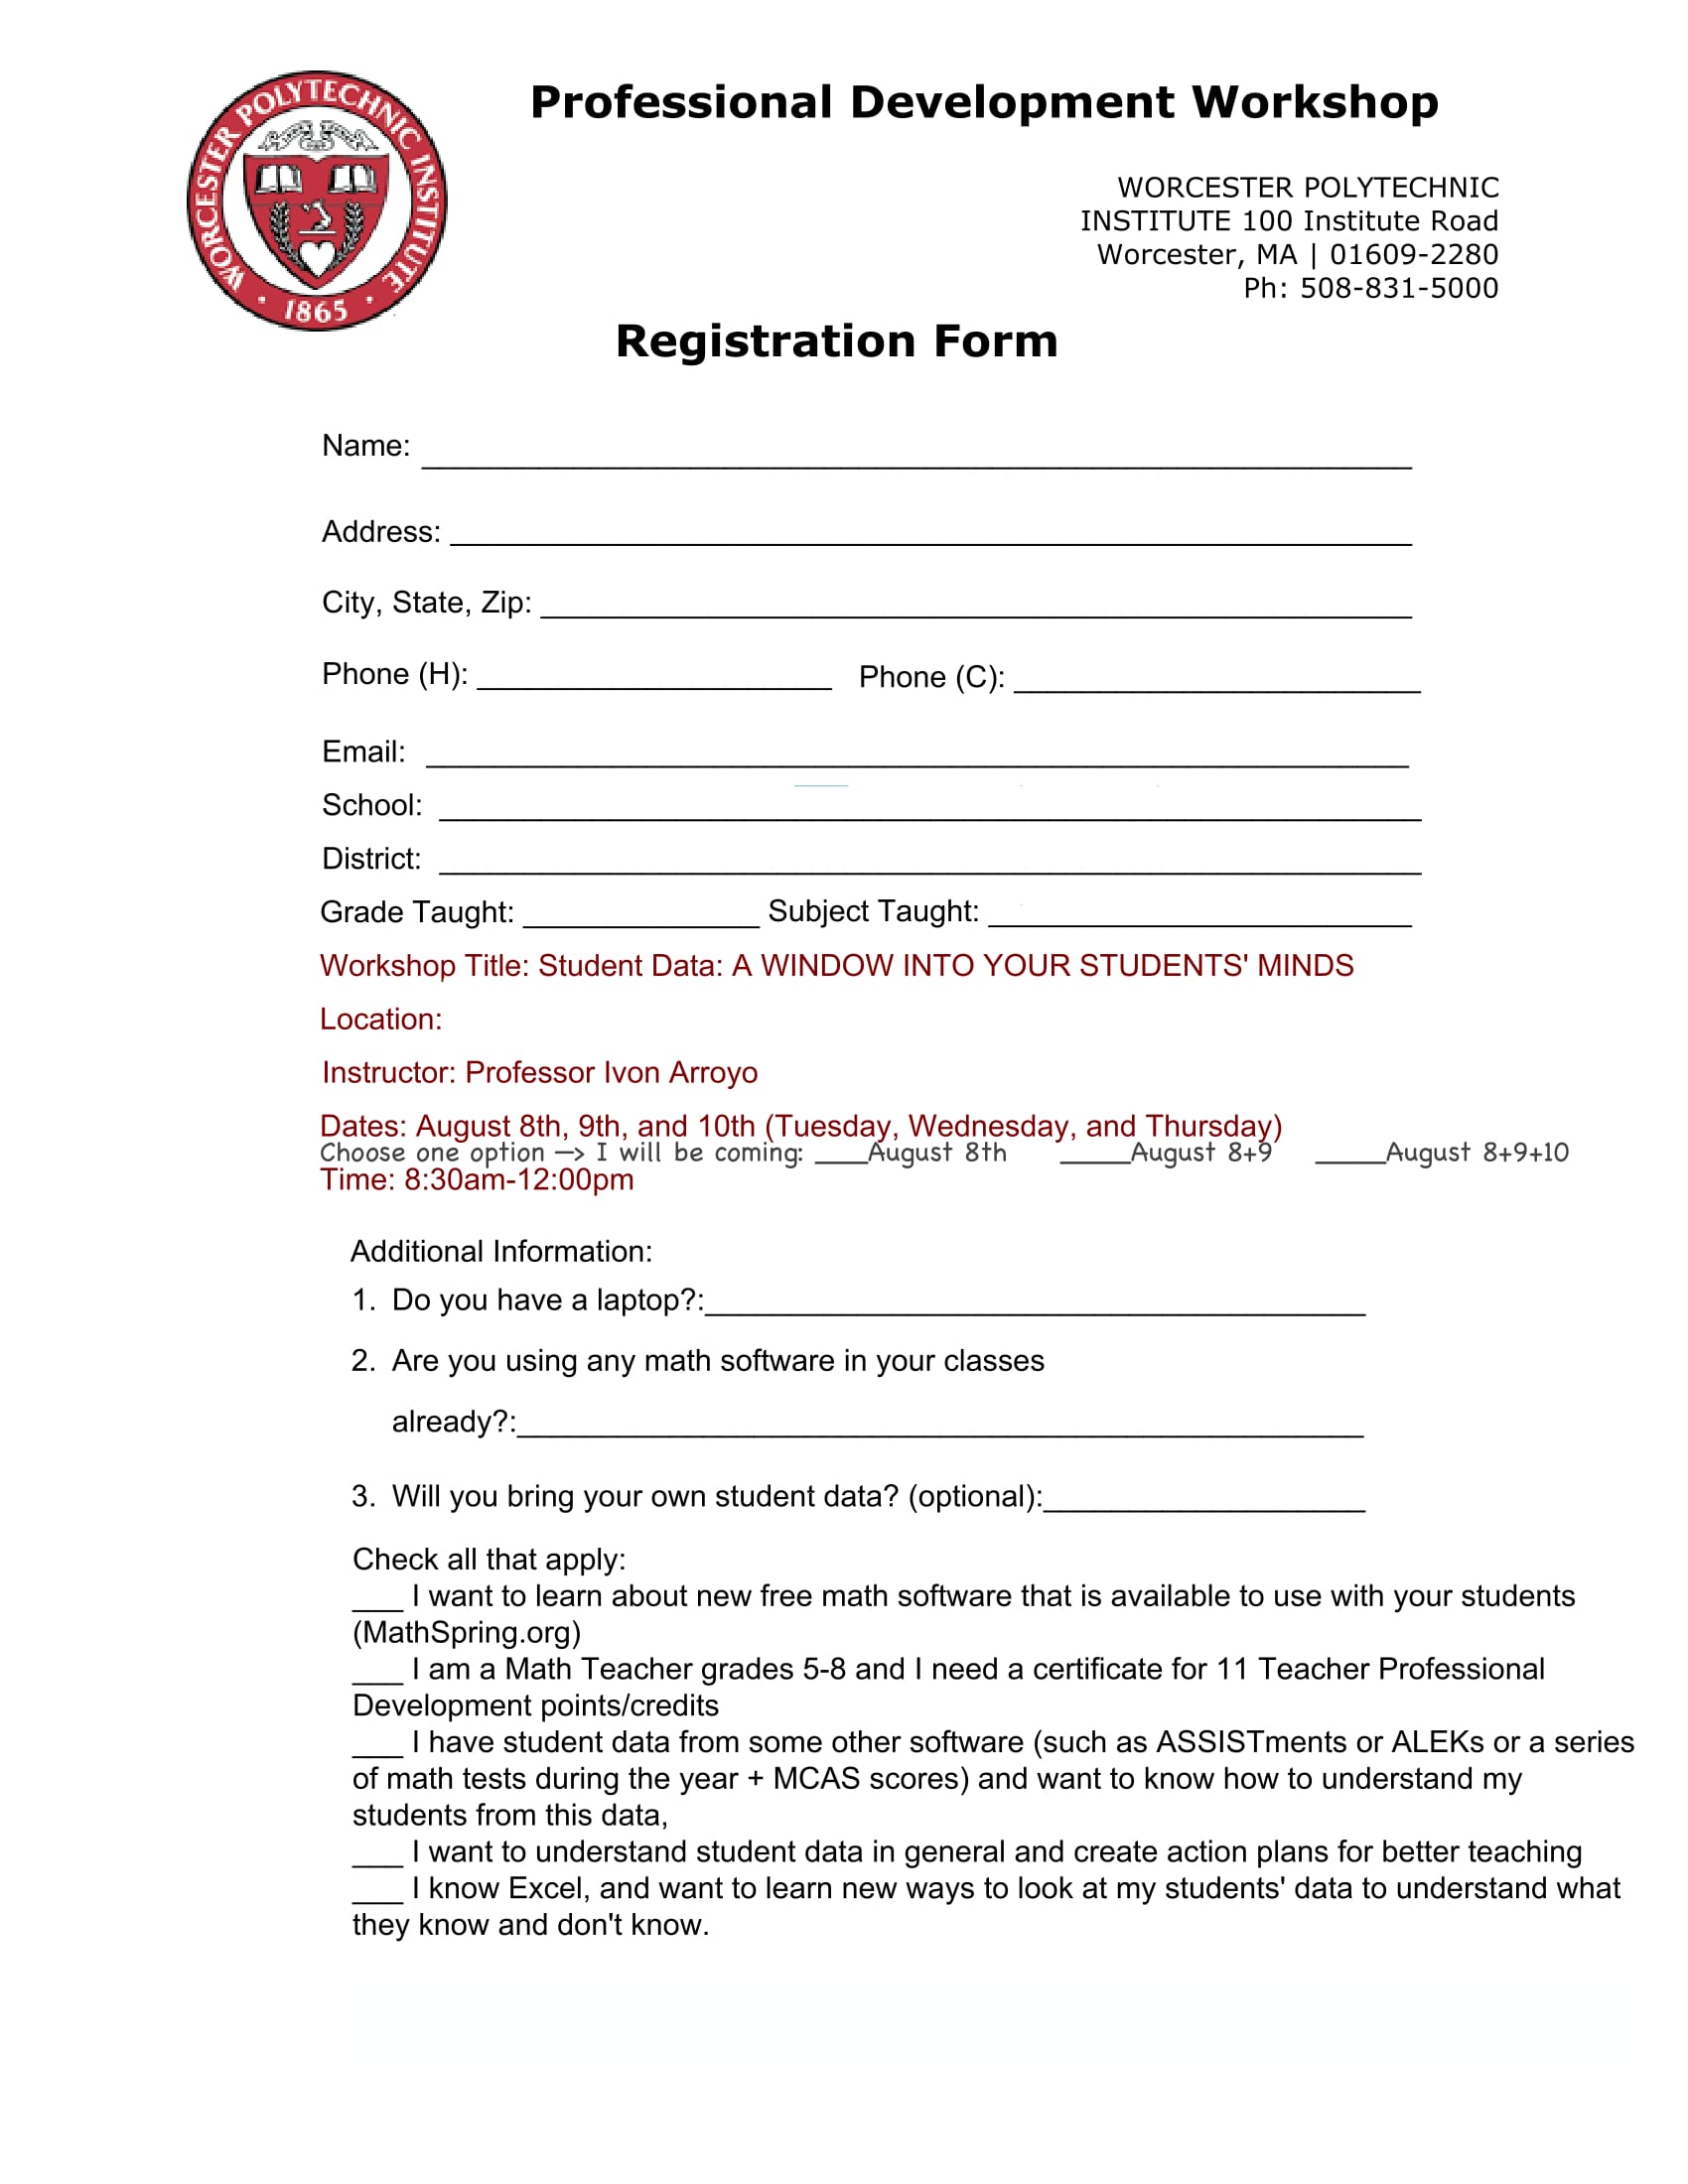 FREE 4+ Professional Development Workshop Registration Forms in PDF